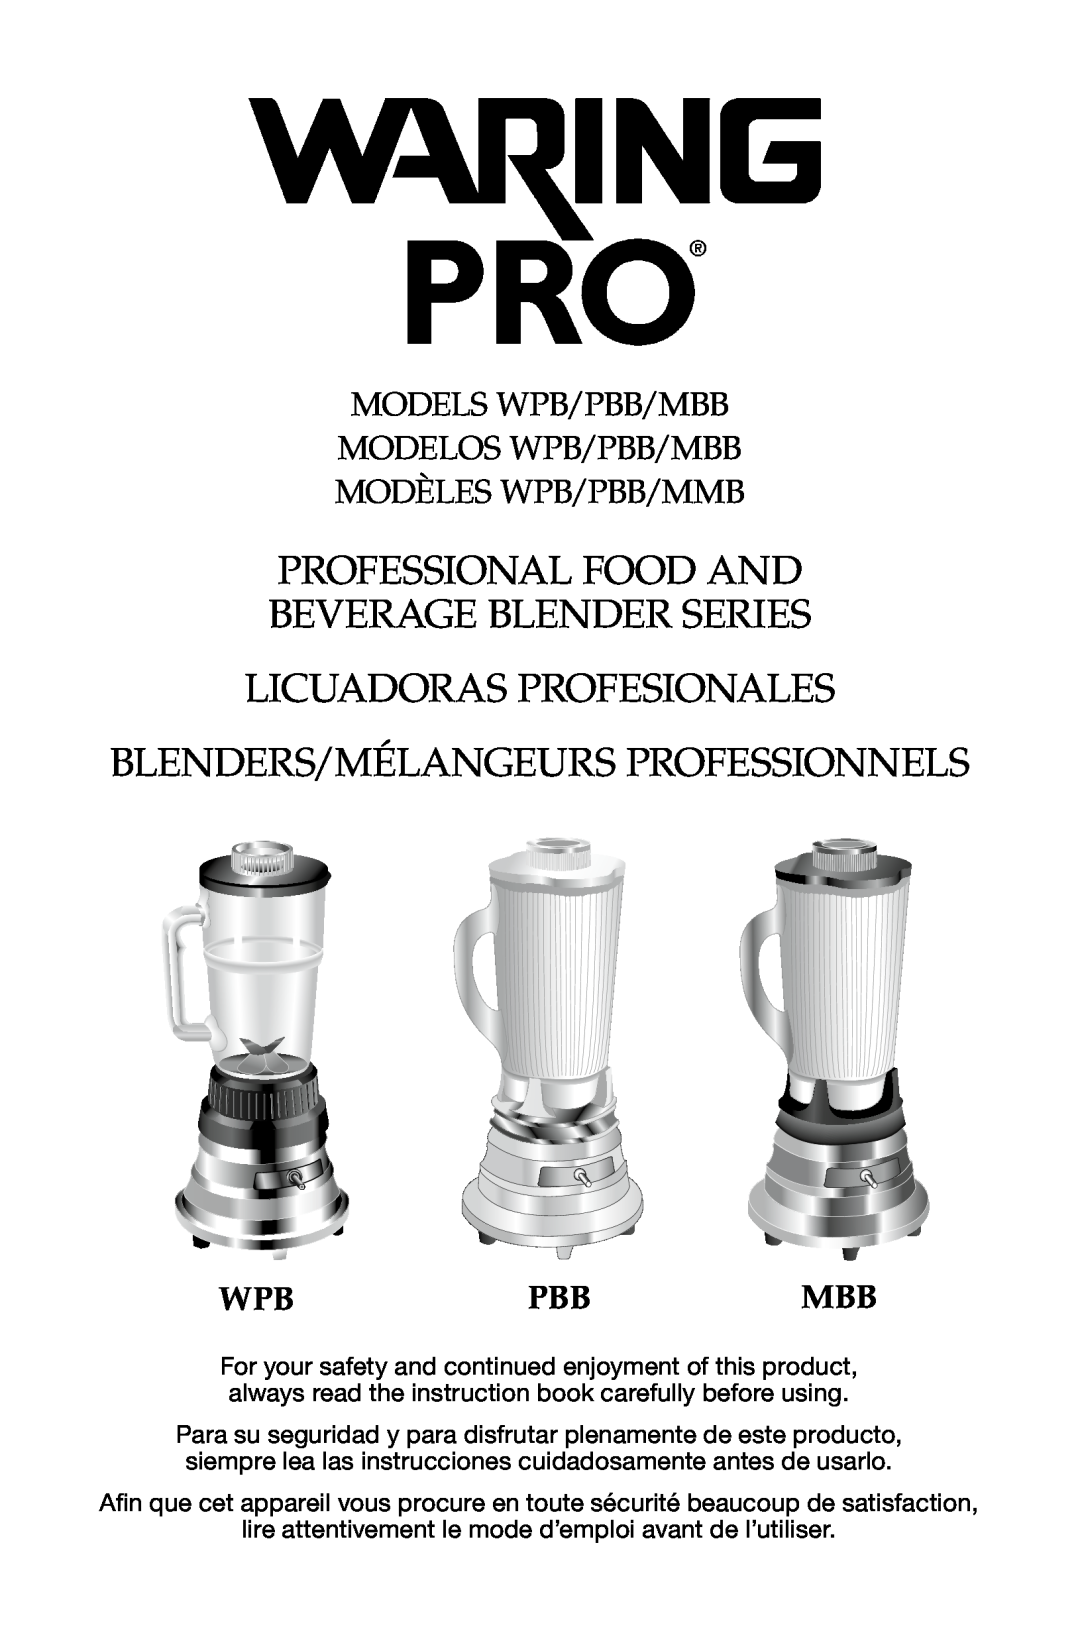 Waring WMN250 manual Professional food and beverage Blender Series, Licuadoras Profesionales, Modèles WPB/PBB/MMB 